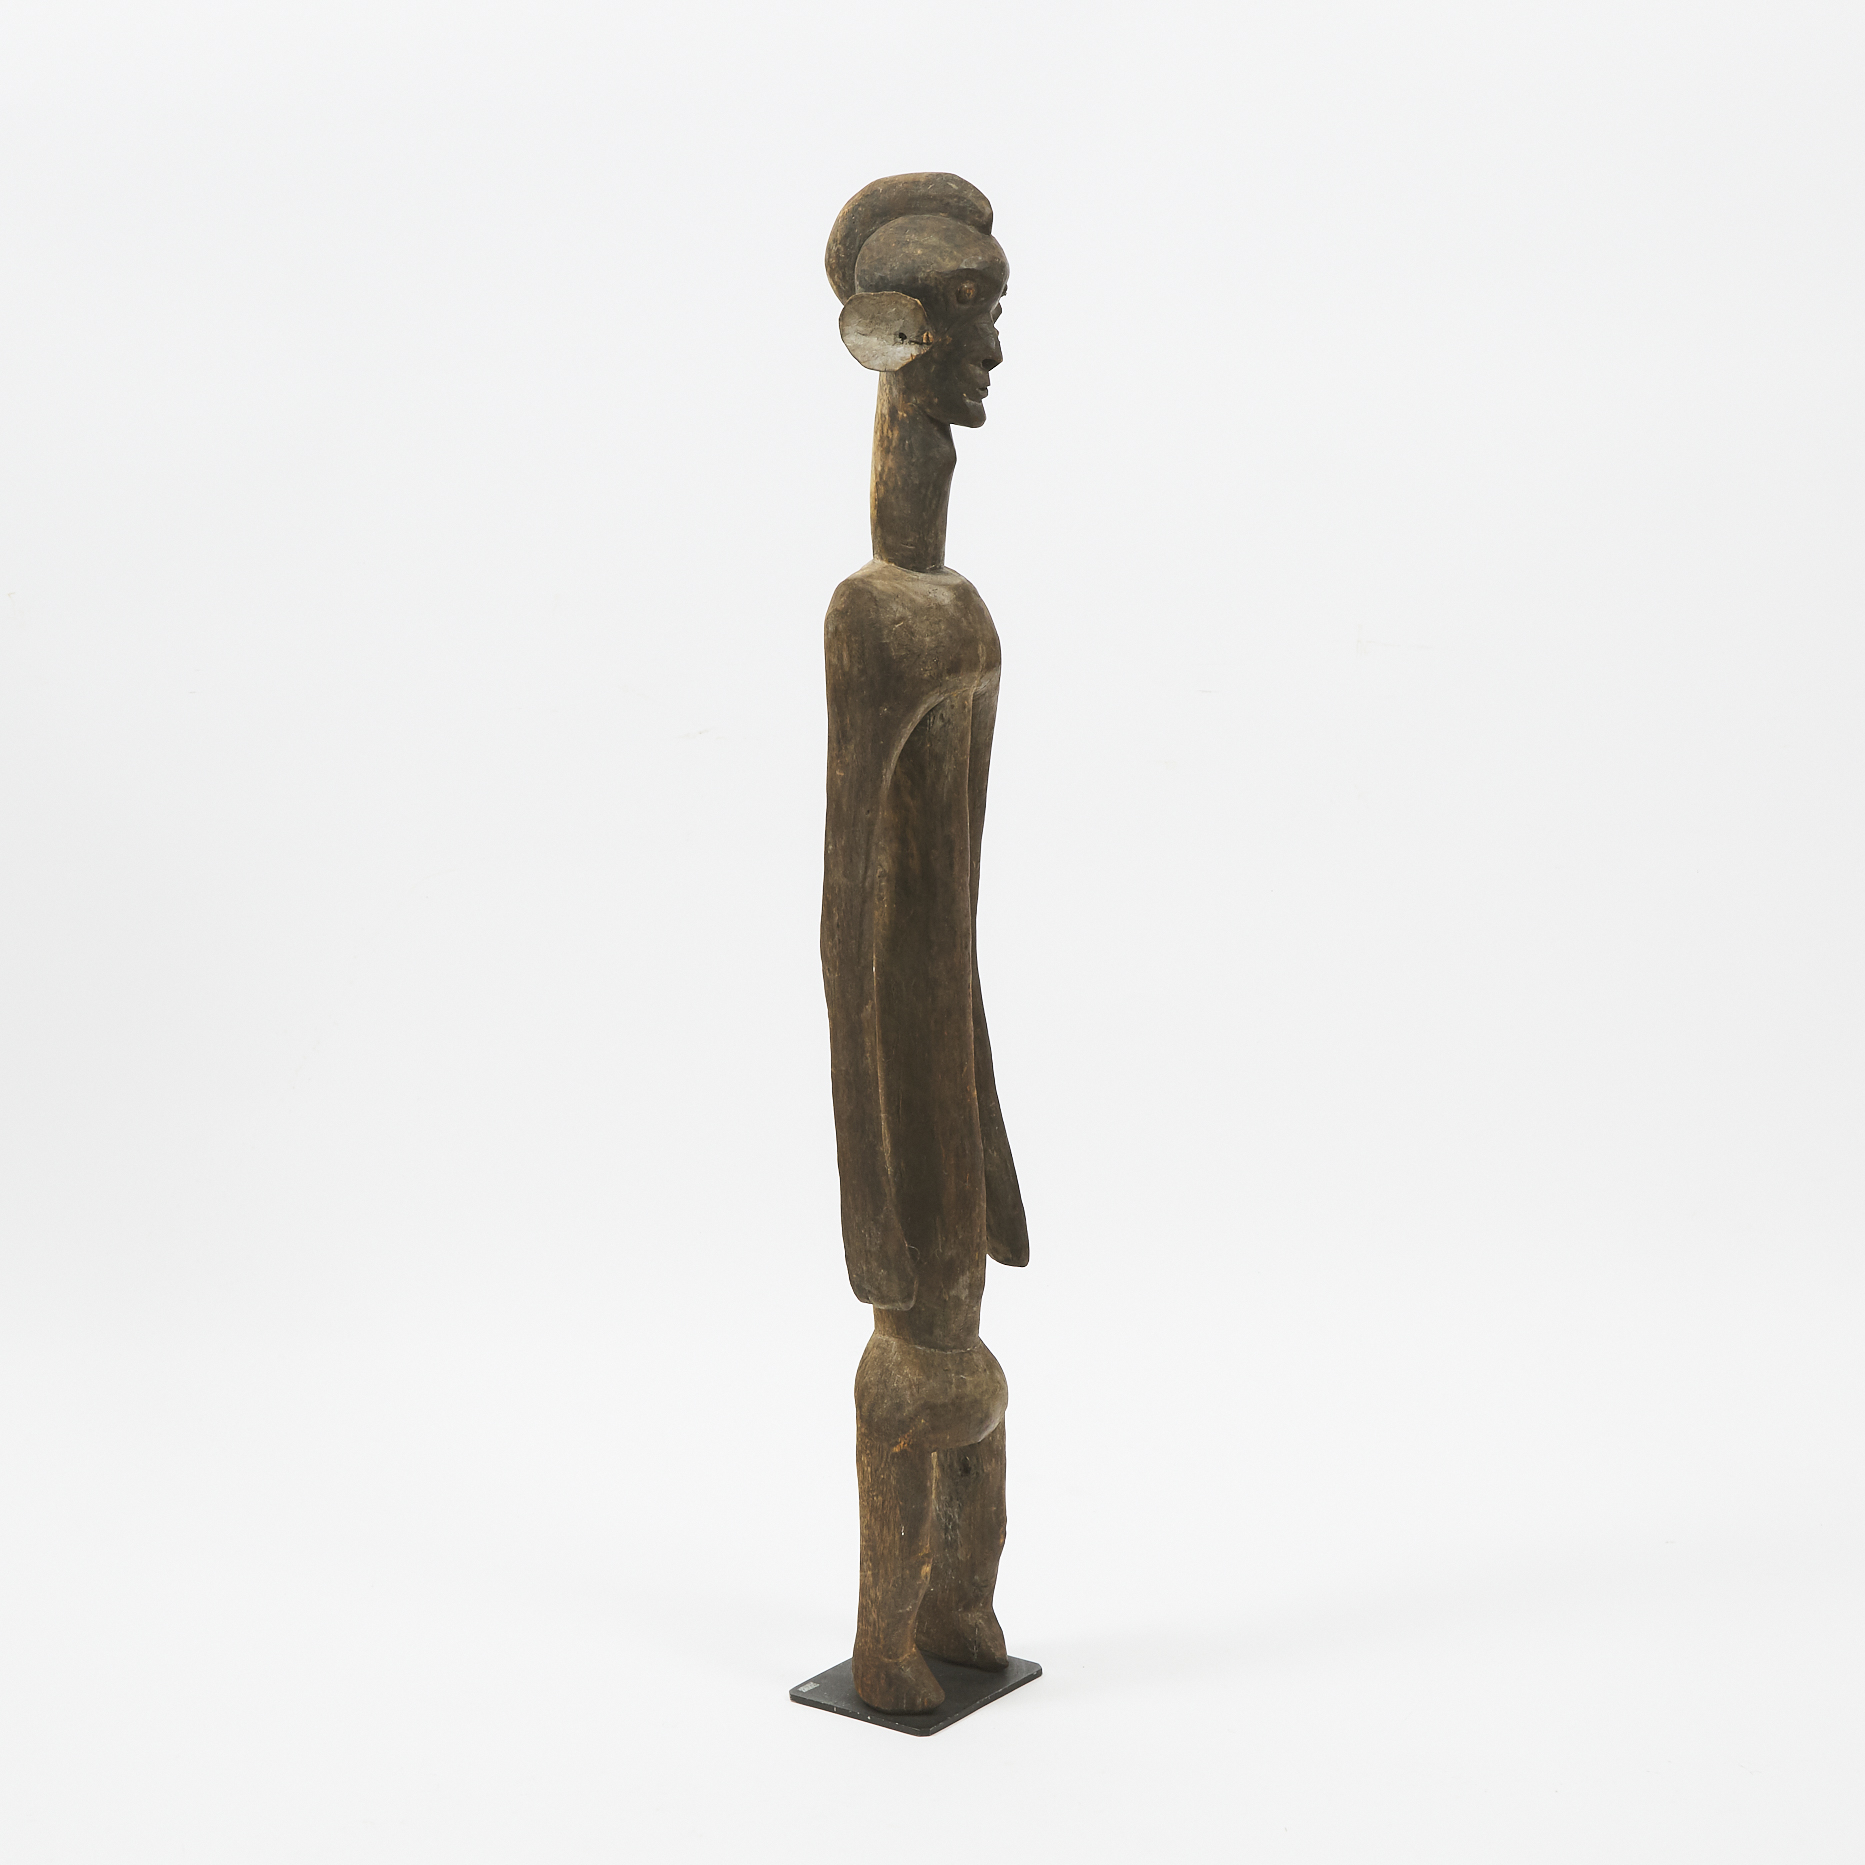 Mumuye Figure, Nigeria, West Africa, early to mid 20th century